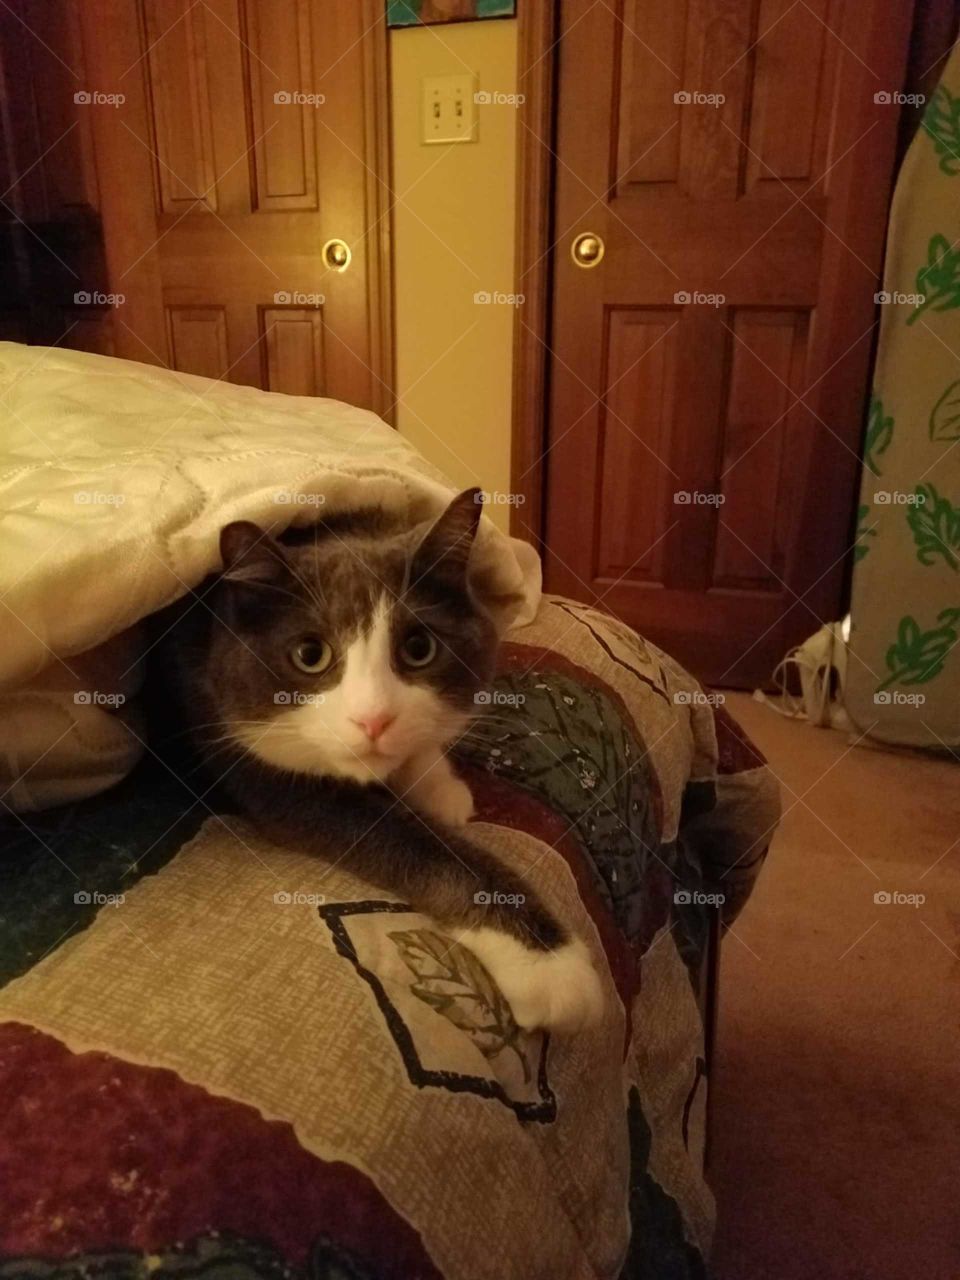 Jasper hiding under a blanket